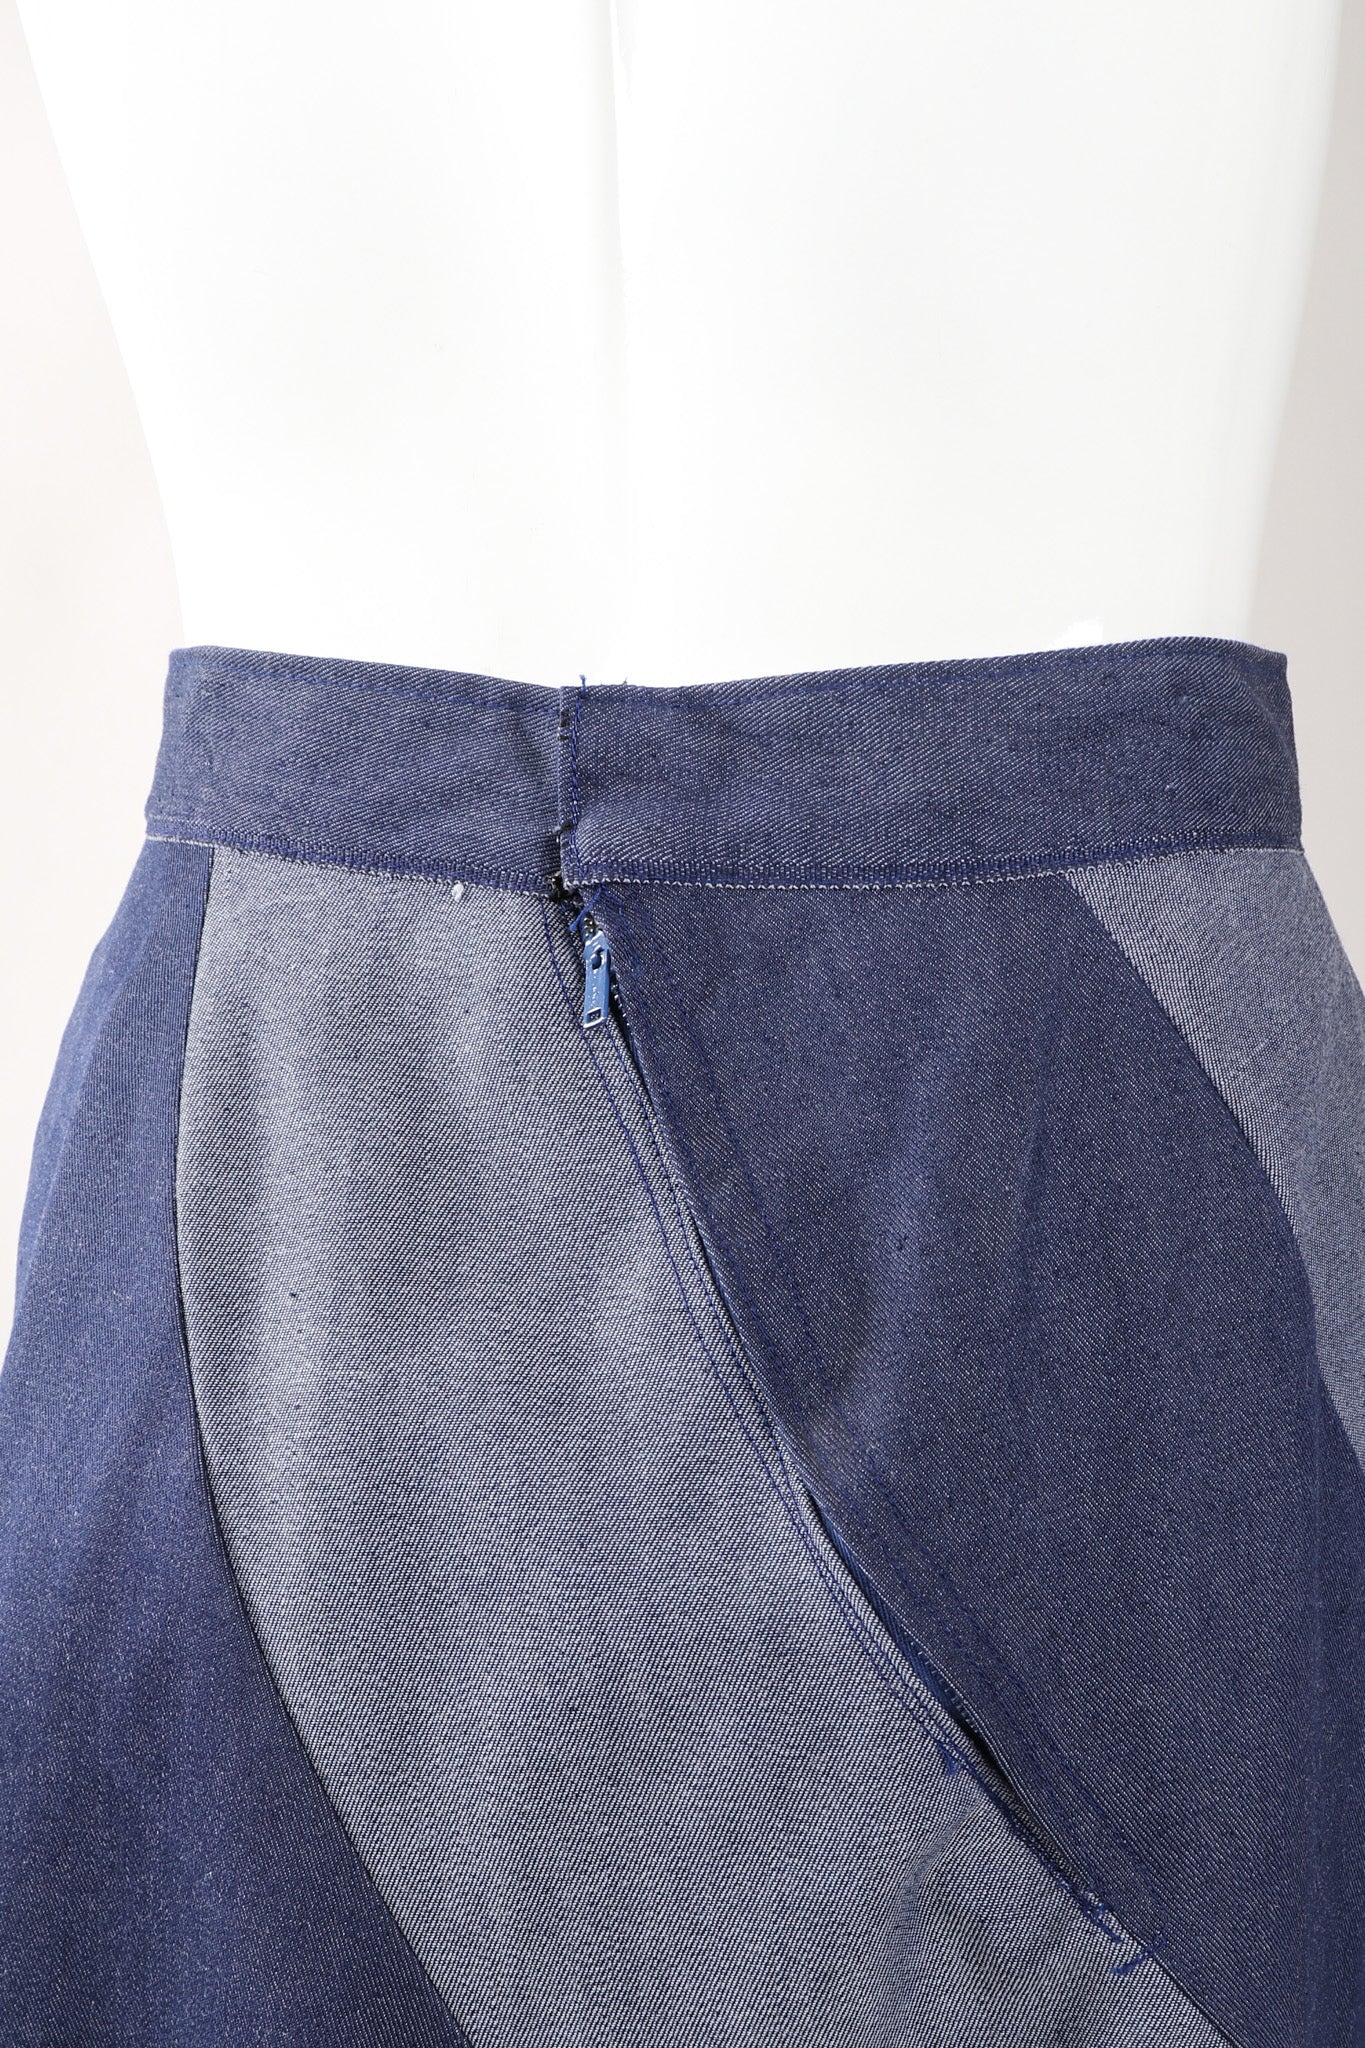 Recess Los Angeles Vintage Studded Denim Swirl Skirt